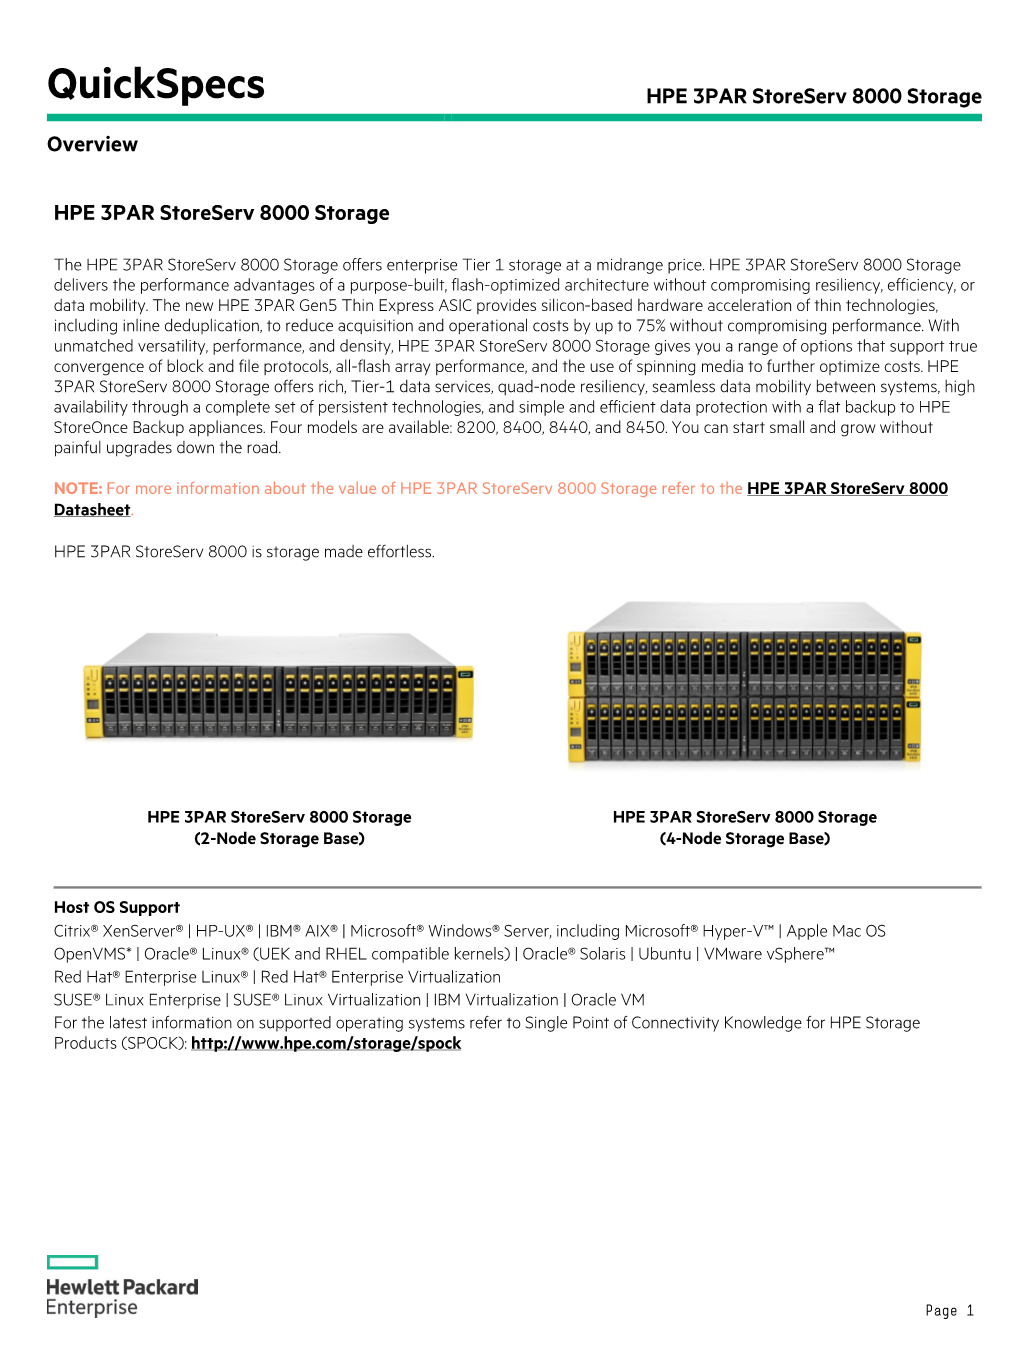 HPE 3PAR Storeserv 8000 Storage Overview